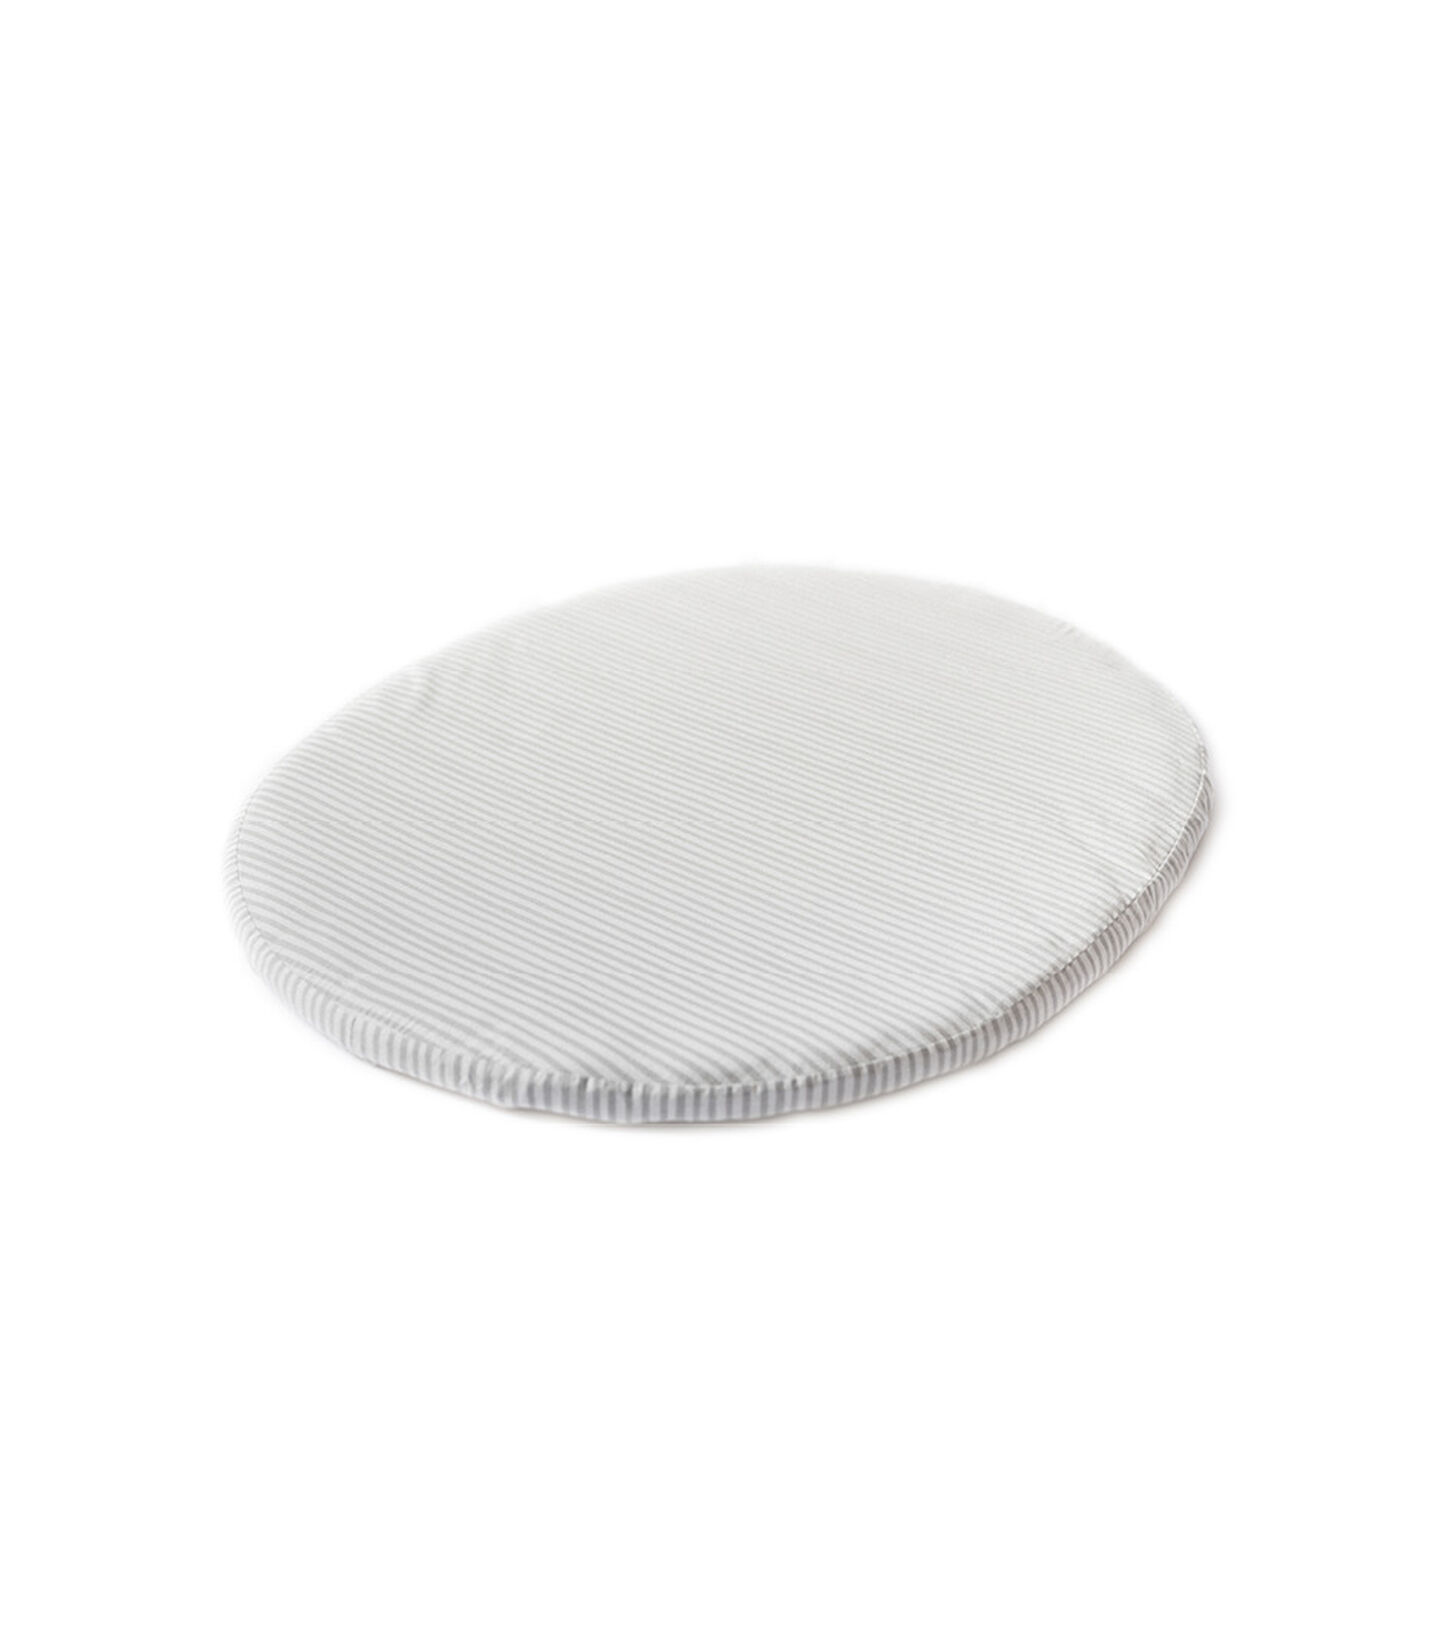 Stokke® Sleepi™ Mini Fitted Sheet Stripes Away Pebbles, Stripes Away Pebbles, mainview view 1